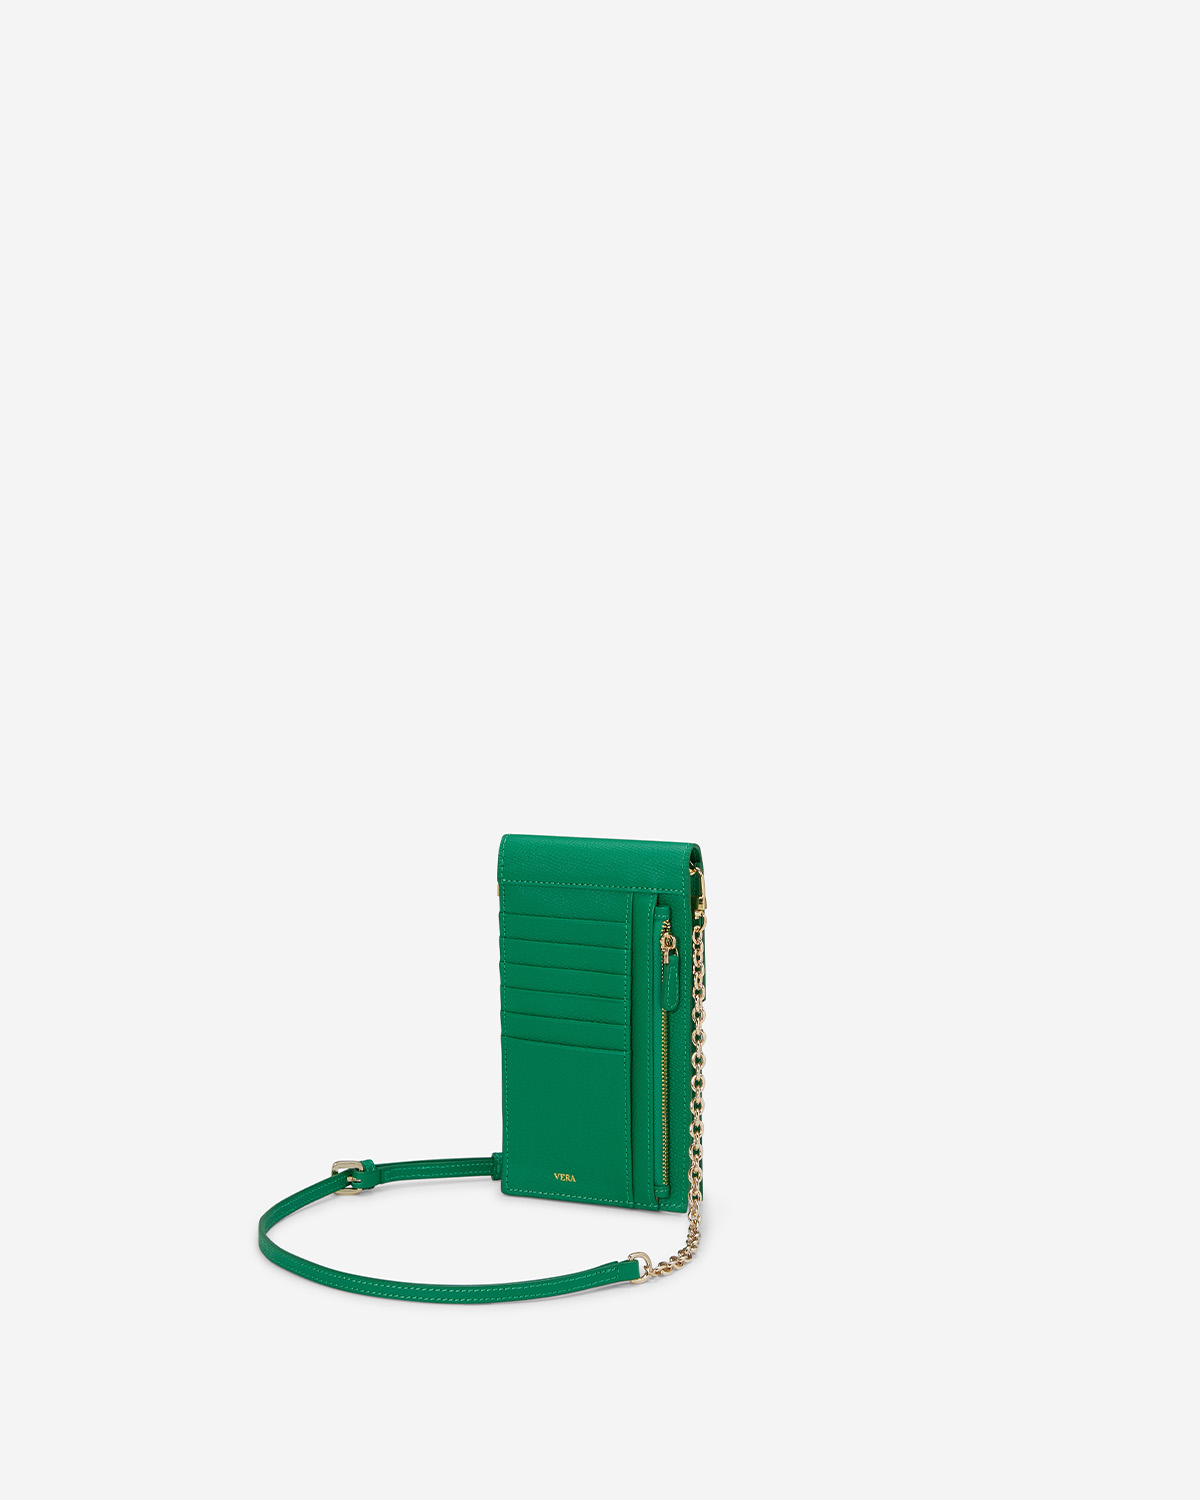 VERA Emily Phone Pouch with Leather Gold Chain in Confident Green กระเป๋าใส่โทรศัพท์หนังแท้ พร้อมฟังก์ชั่นกระเป๋าสตางค์ มาพร้อมสายสะพายโซ่หนังถอดได้ สีเขียว